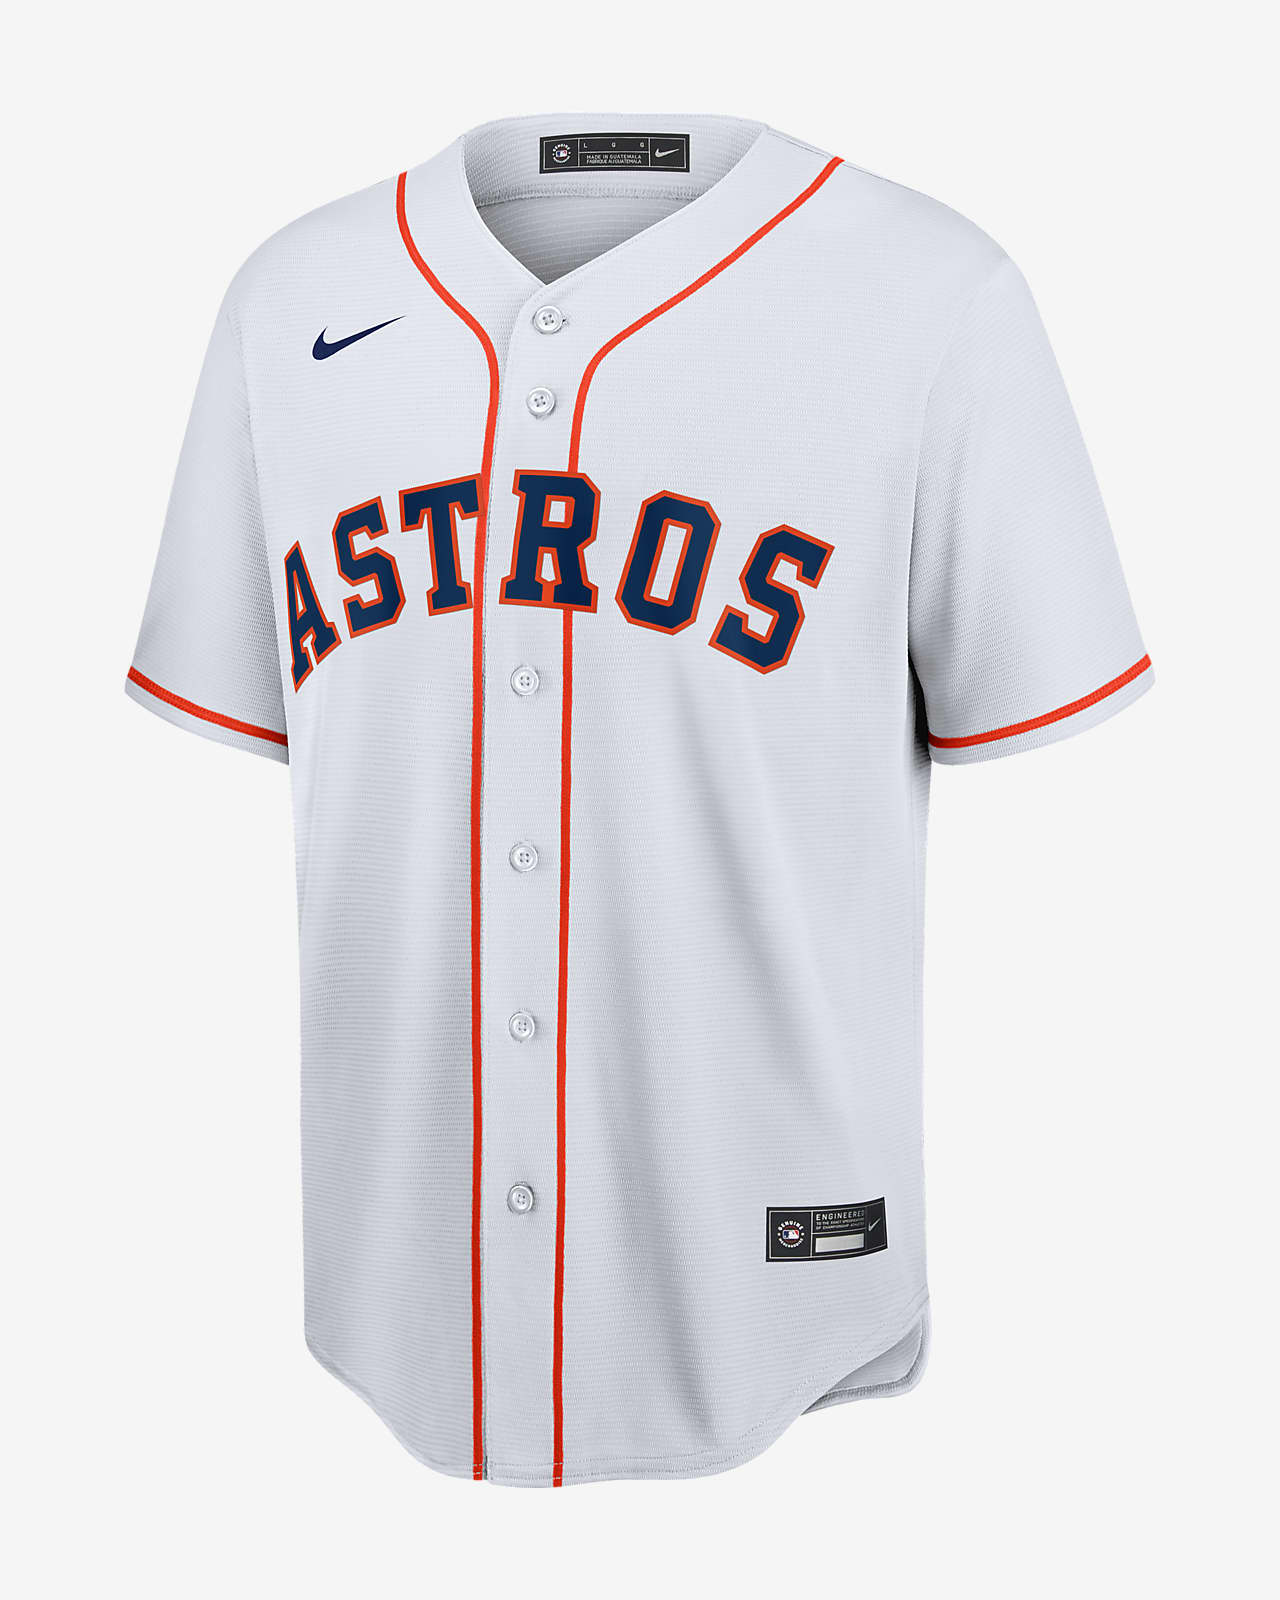 Camiseta de béisbol réplica para hombre MLB Houston Astros.